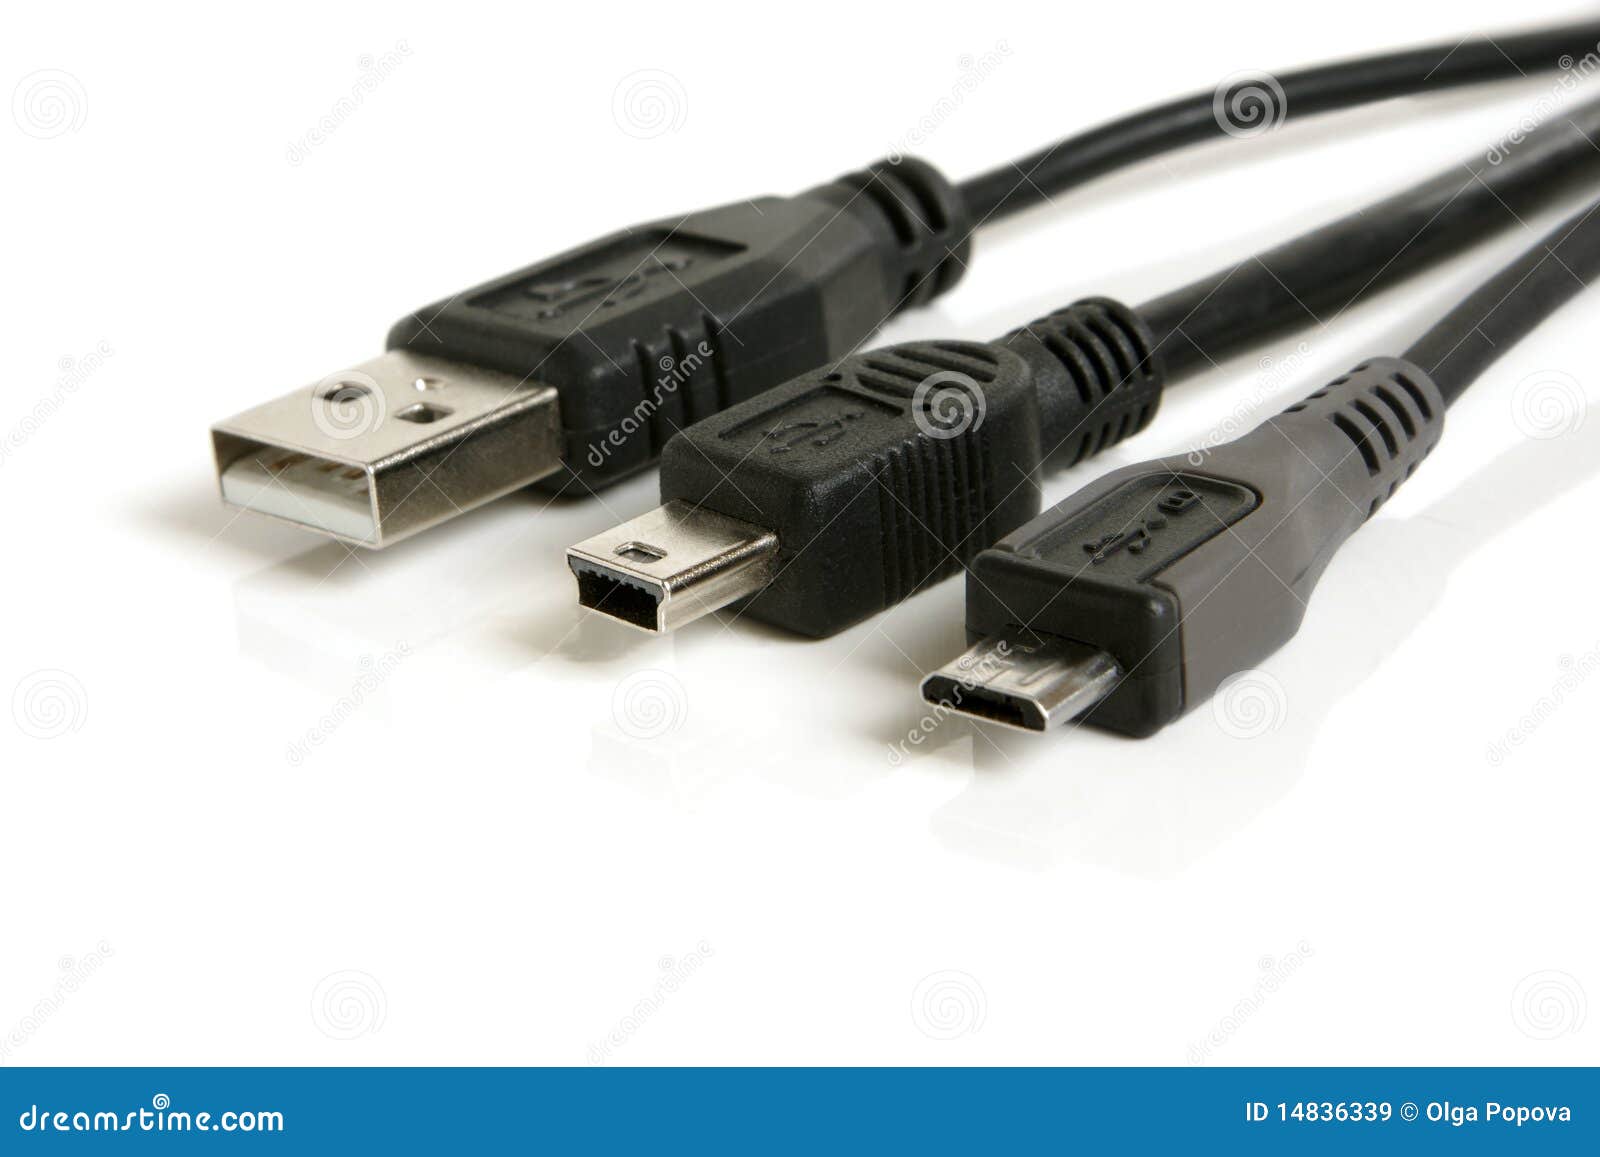 usb-mini-usb-micro-usb-cable-14836339.jpg